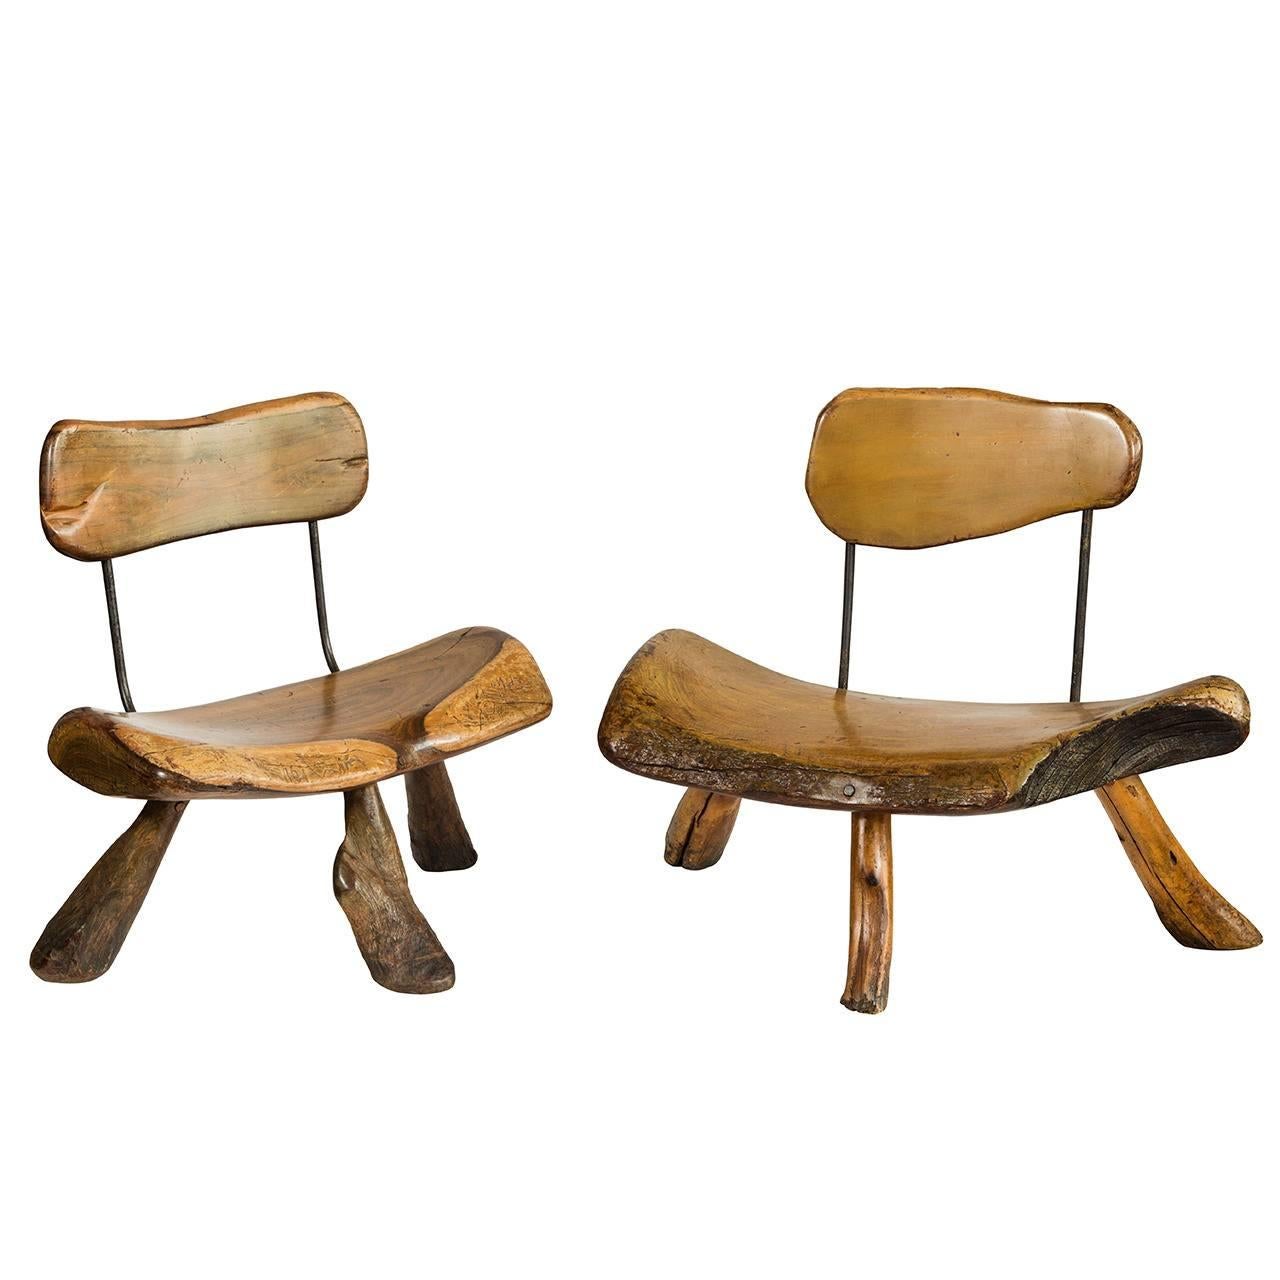 Handmade wood and iron chairs